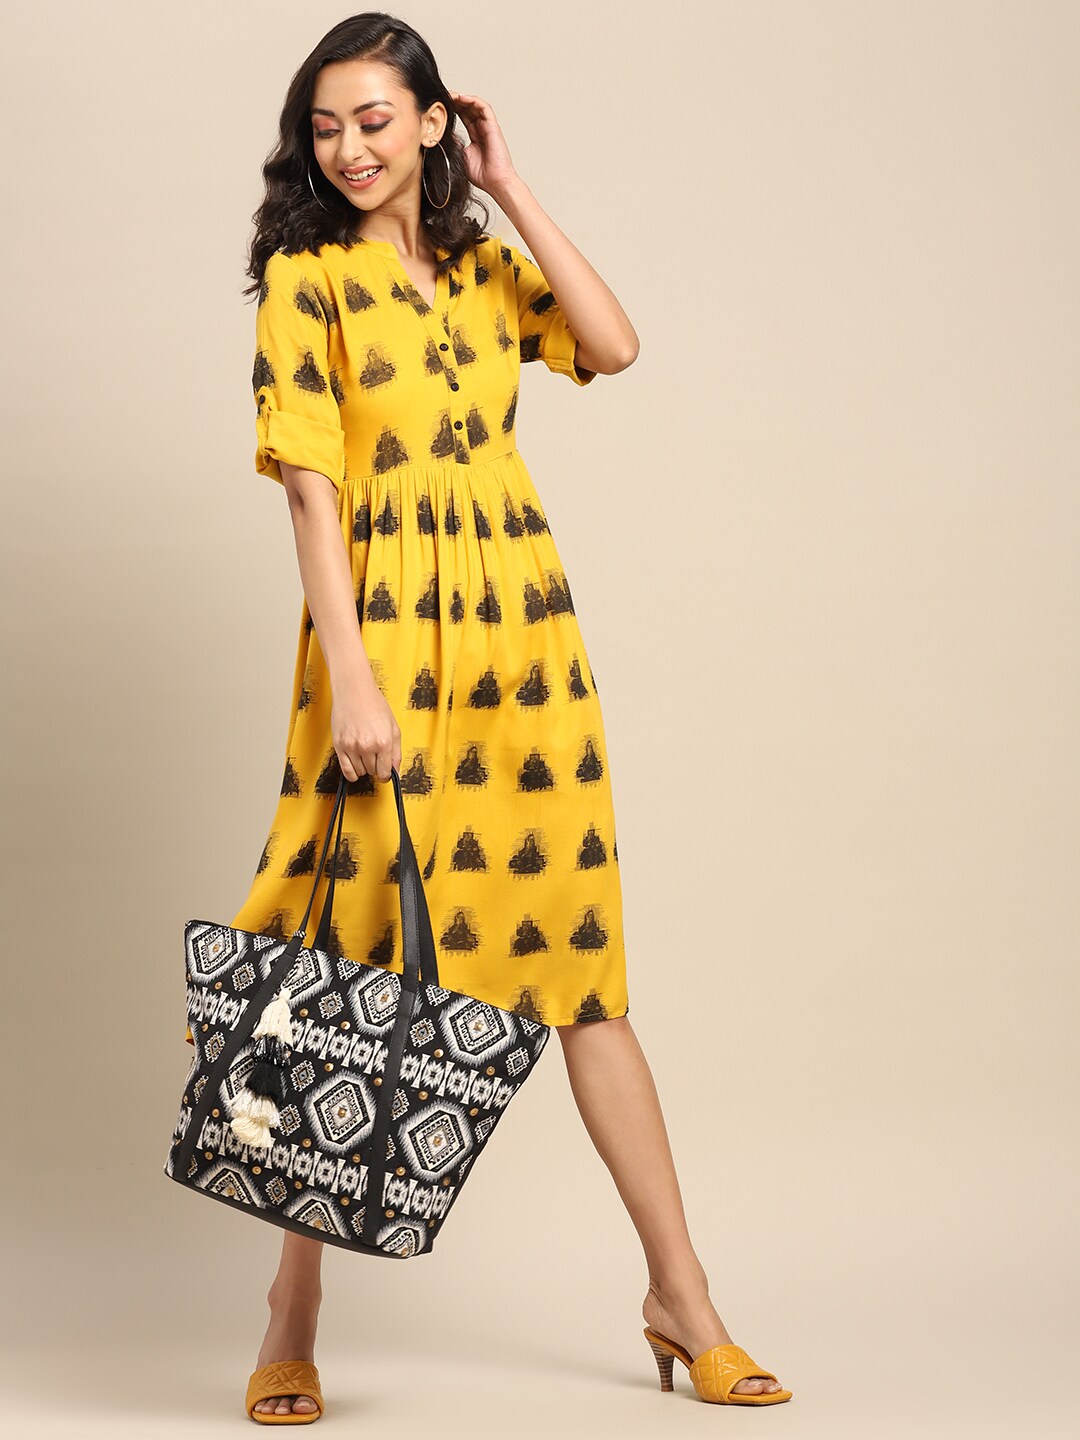 Anouk Black & White Woven Design Shoulder Bag Price in India